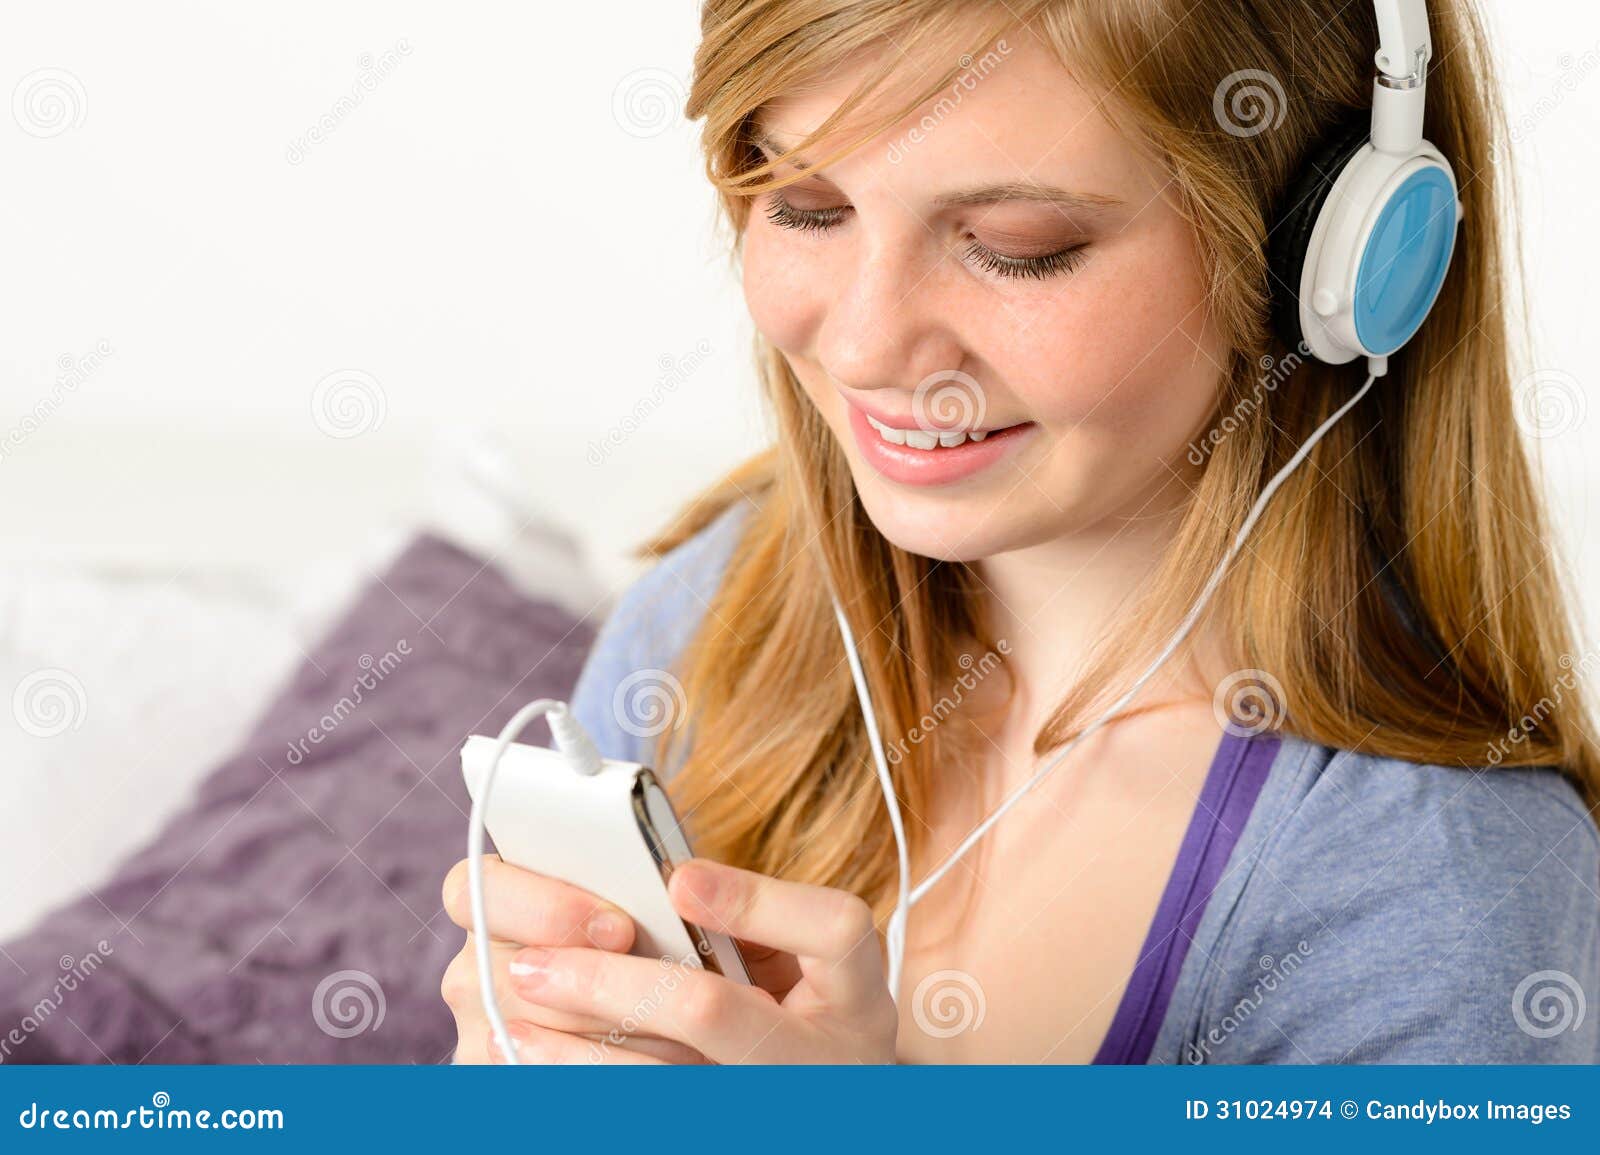 fresh adolescent girl listening to music